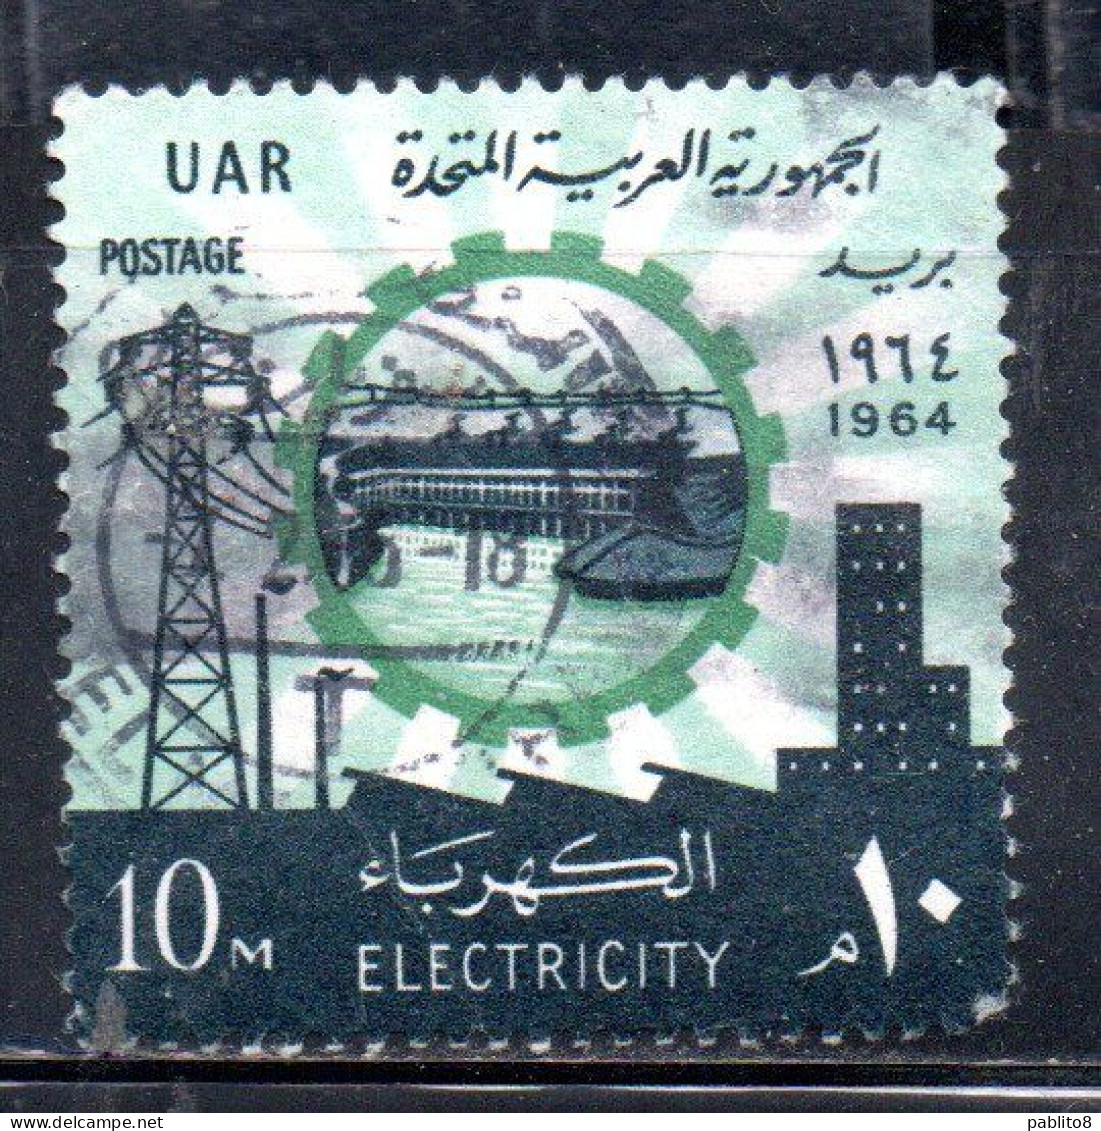 UAR EGYPT EGITTO 1964 ELECTRICITY ASWAN HIGH DAM HYDROELICTRIC POWER STATION LAND RECLAMATION 10m USED USATO - Oblitérés